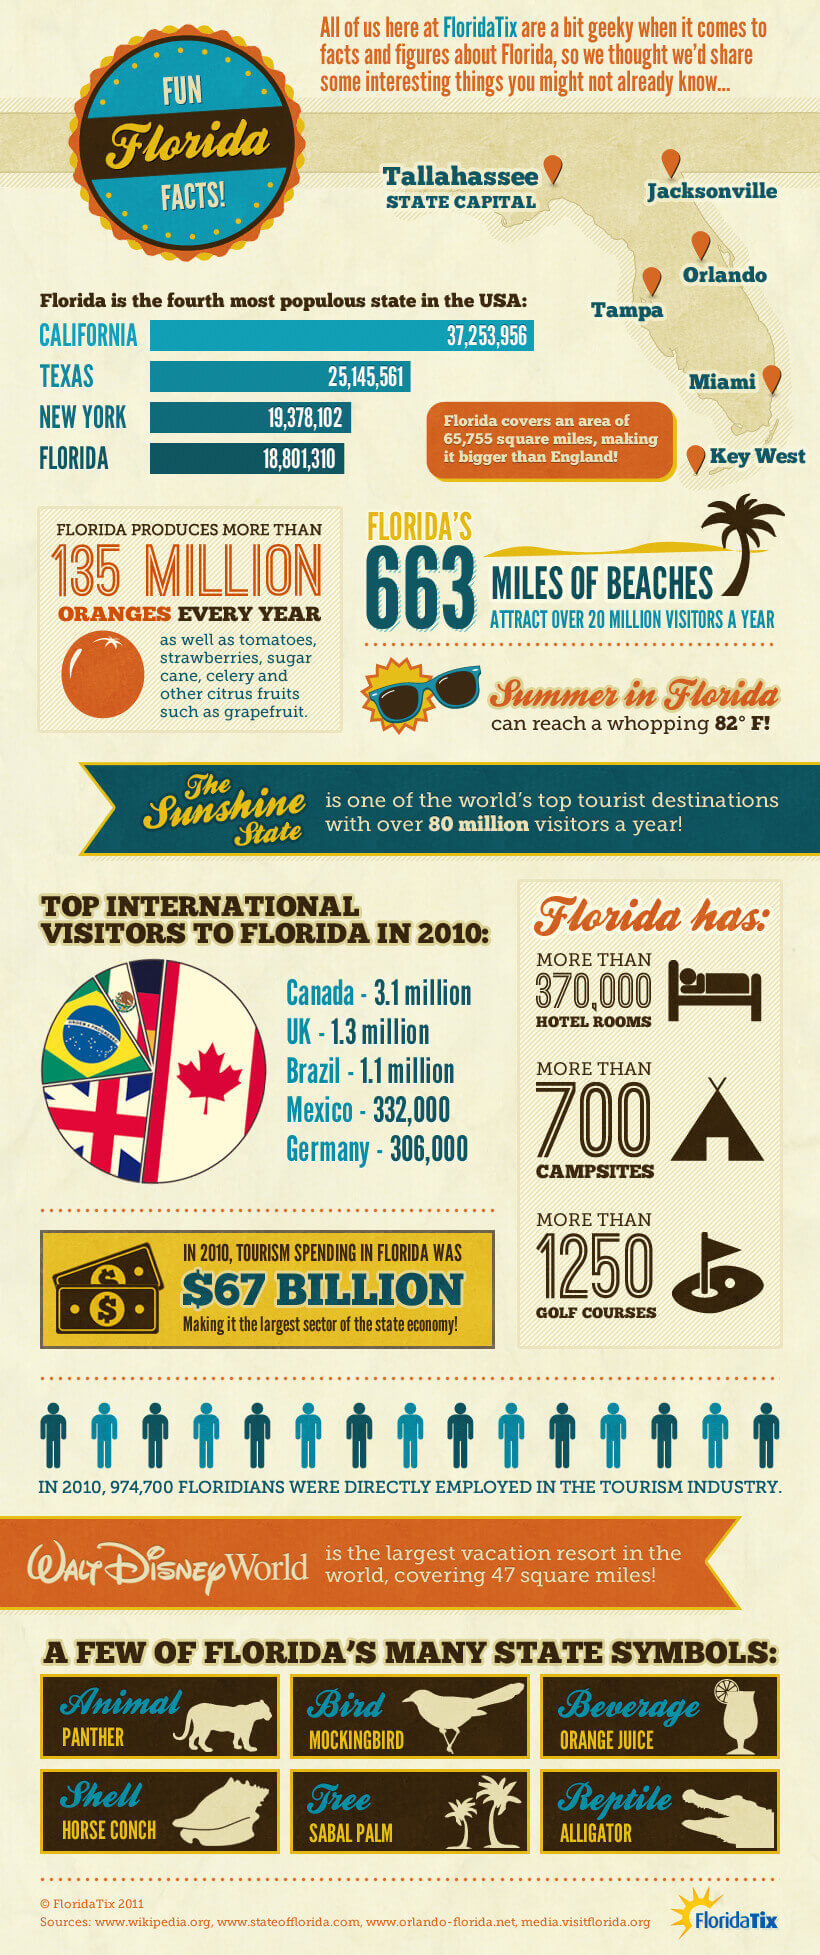 2010 statistics on Florida Tourism